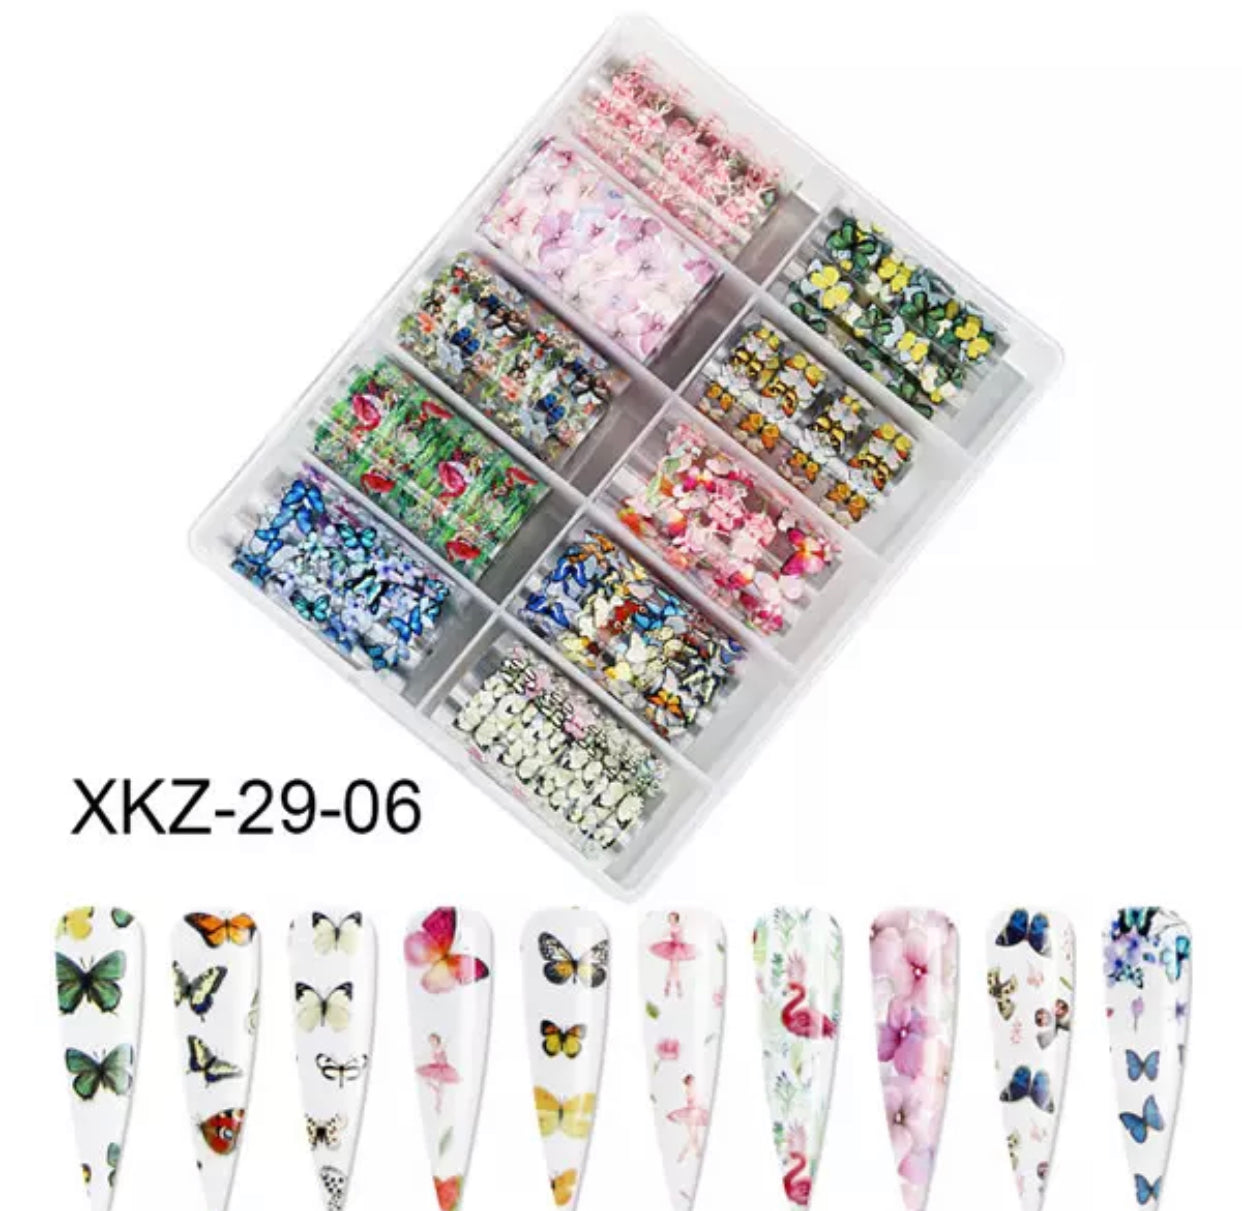 Transparent Flamingo - Butterfly mix 12 Different Design XKZ 29-06 - Premier Nail Supply 